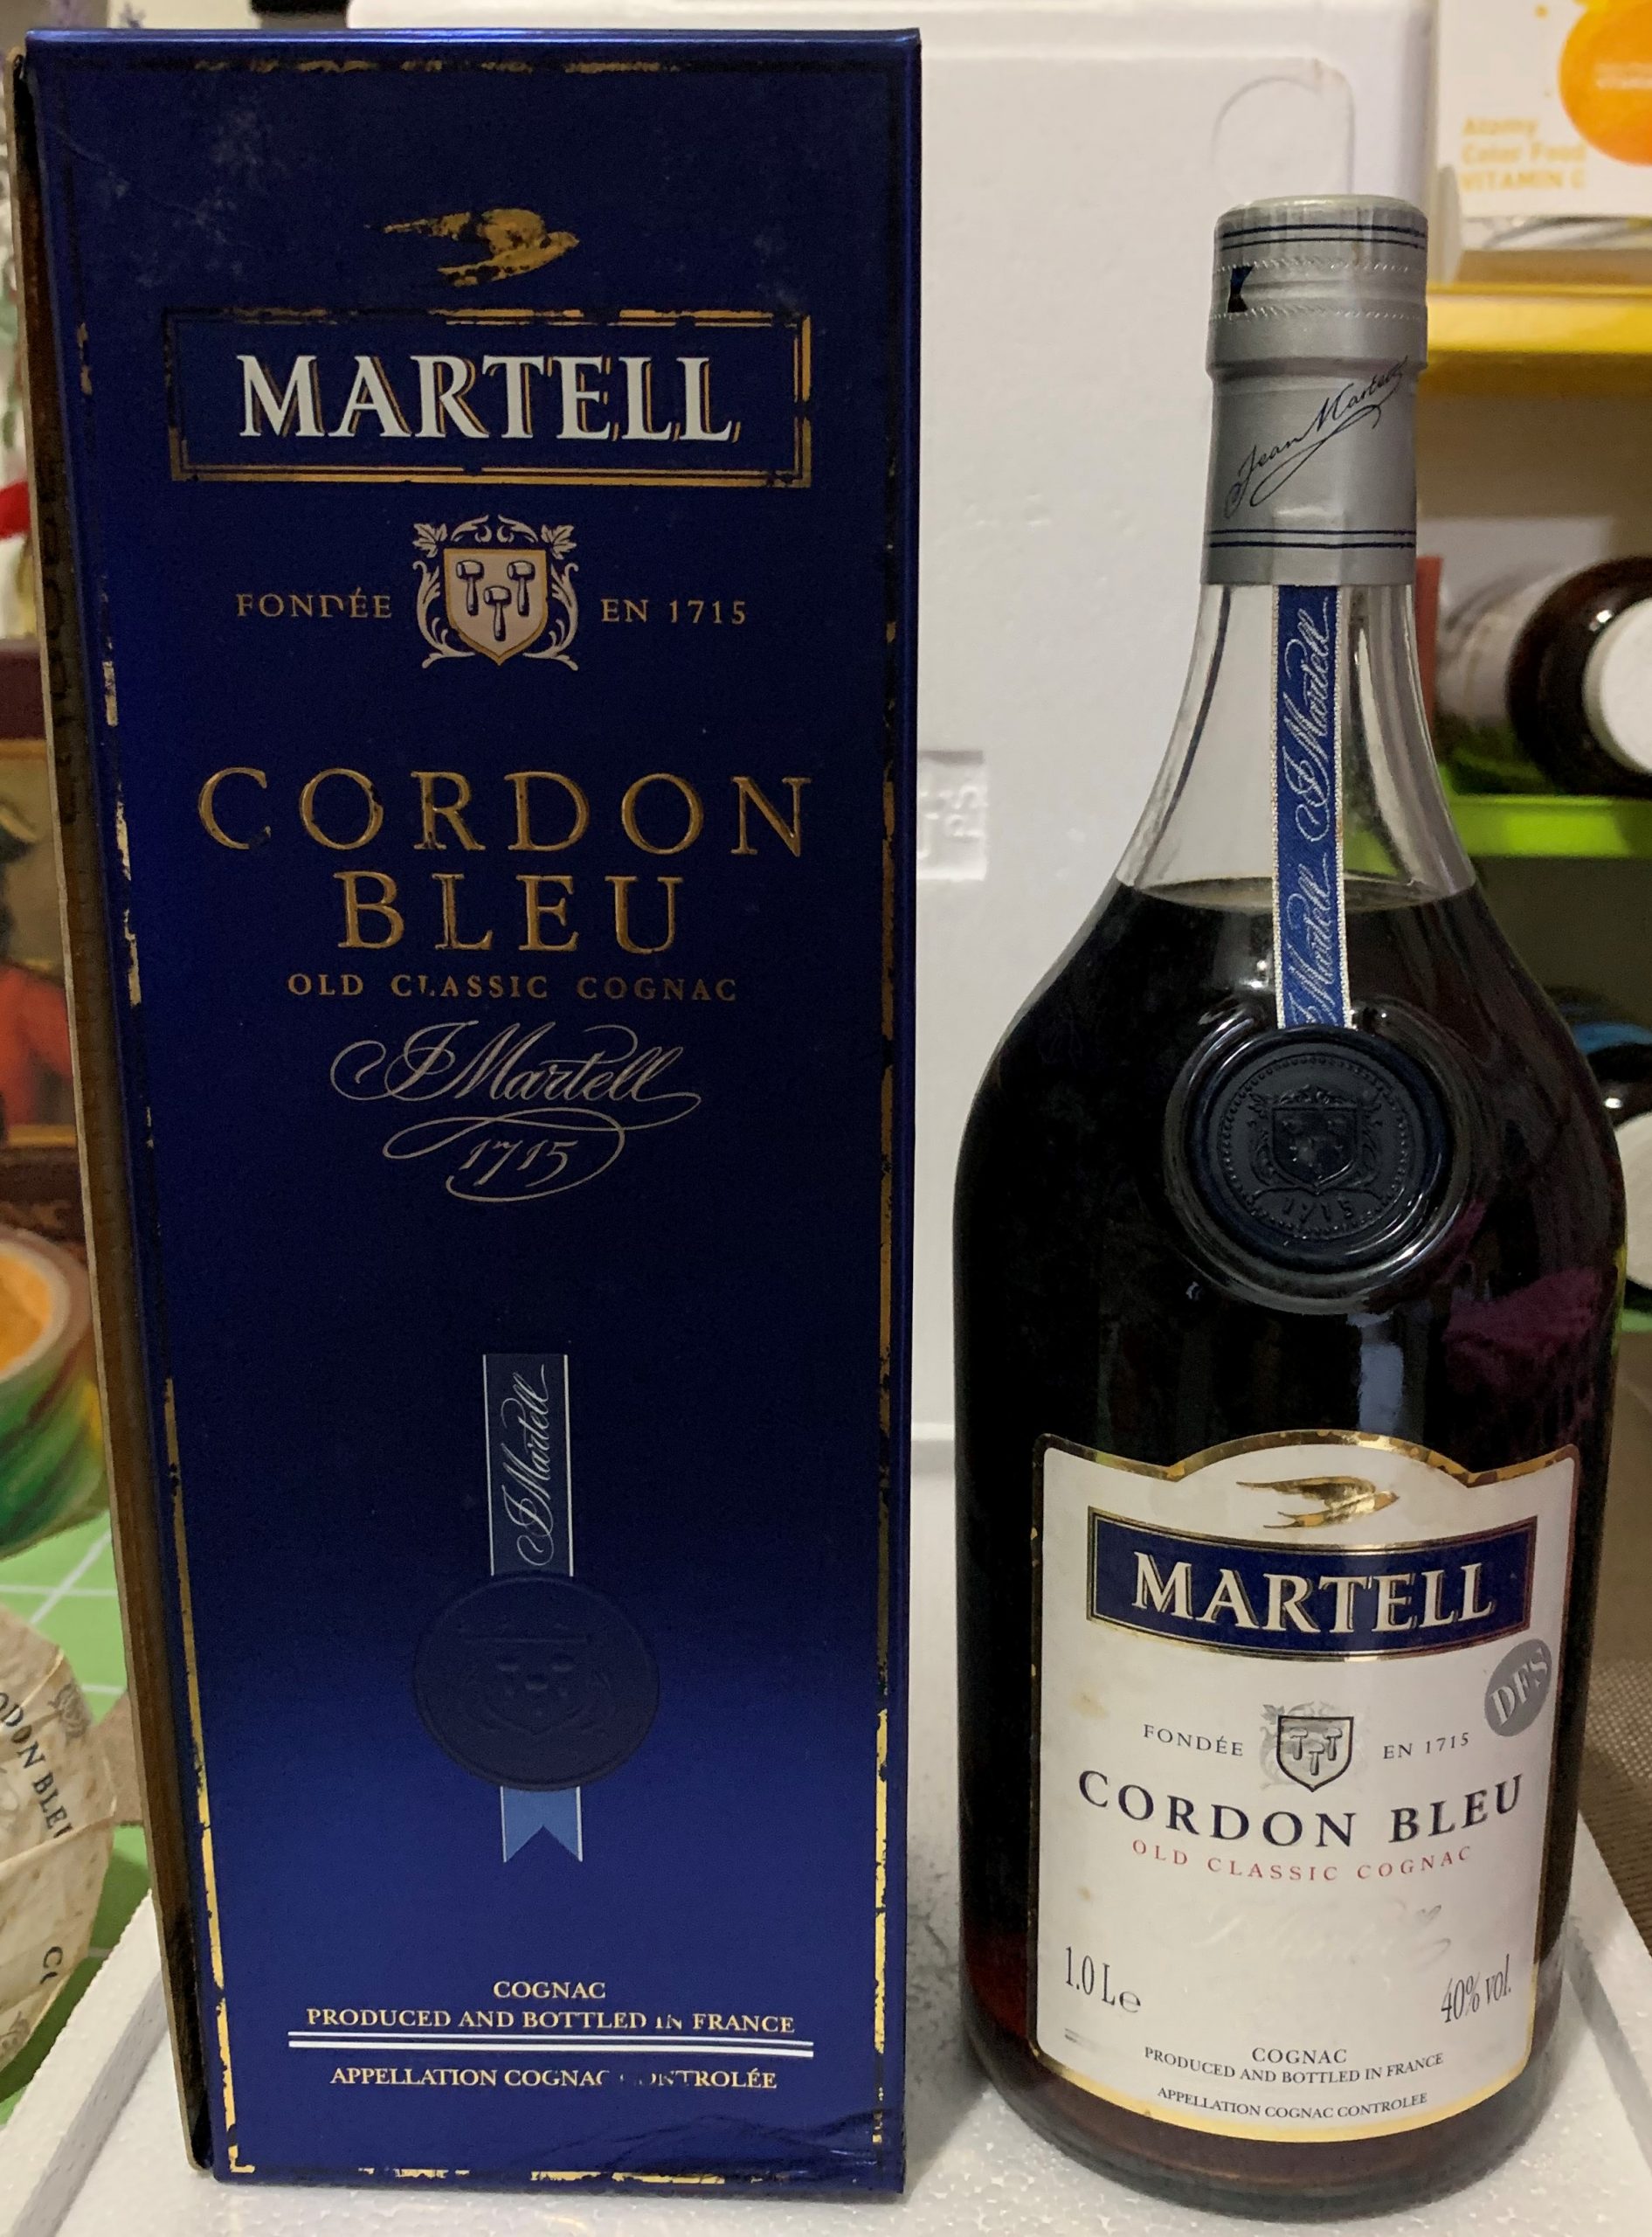 Martell Cordon Bleu – Old Classic Cognac